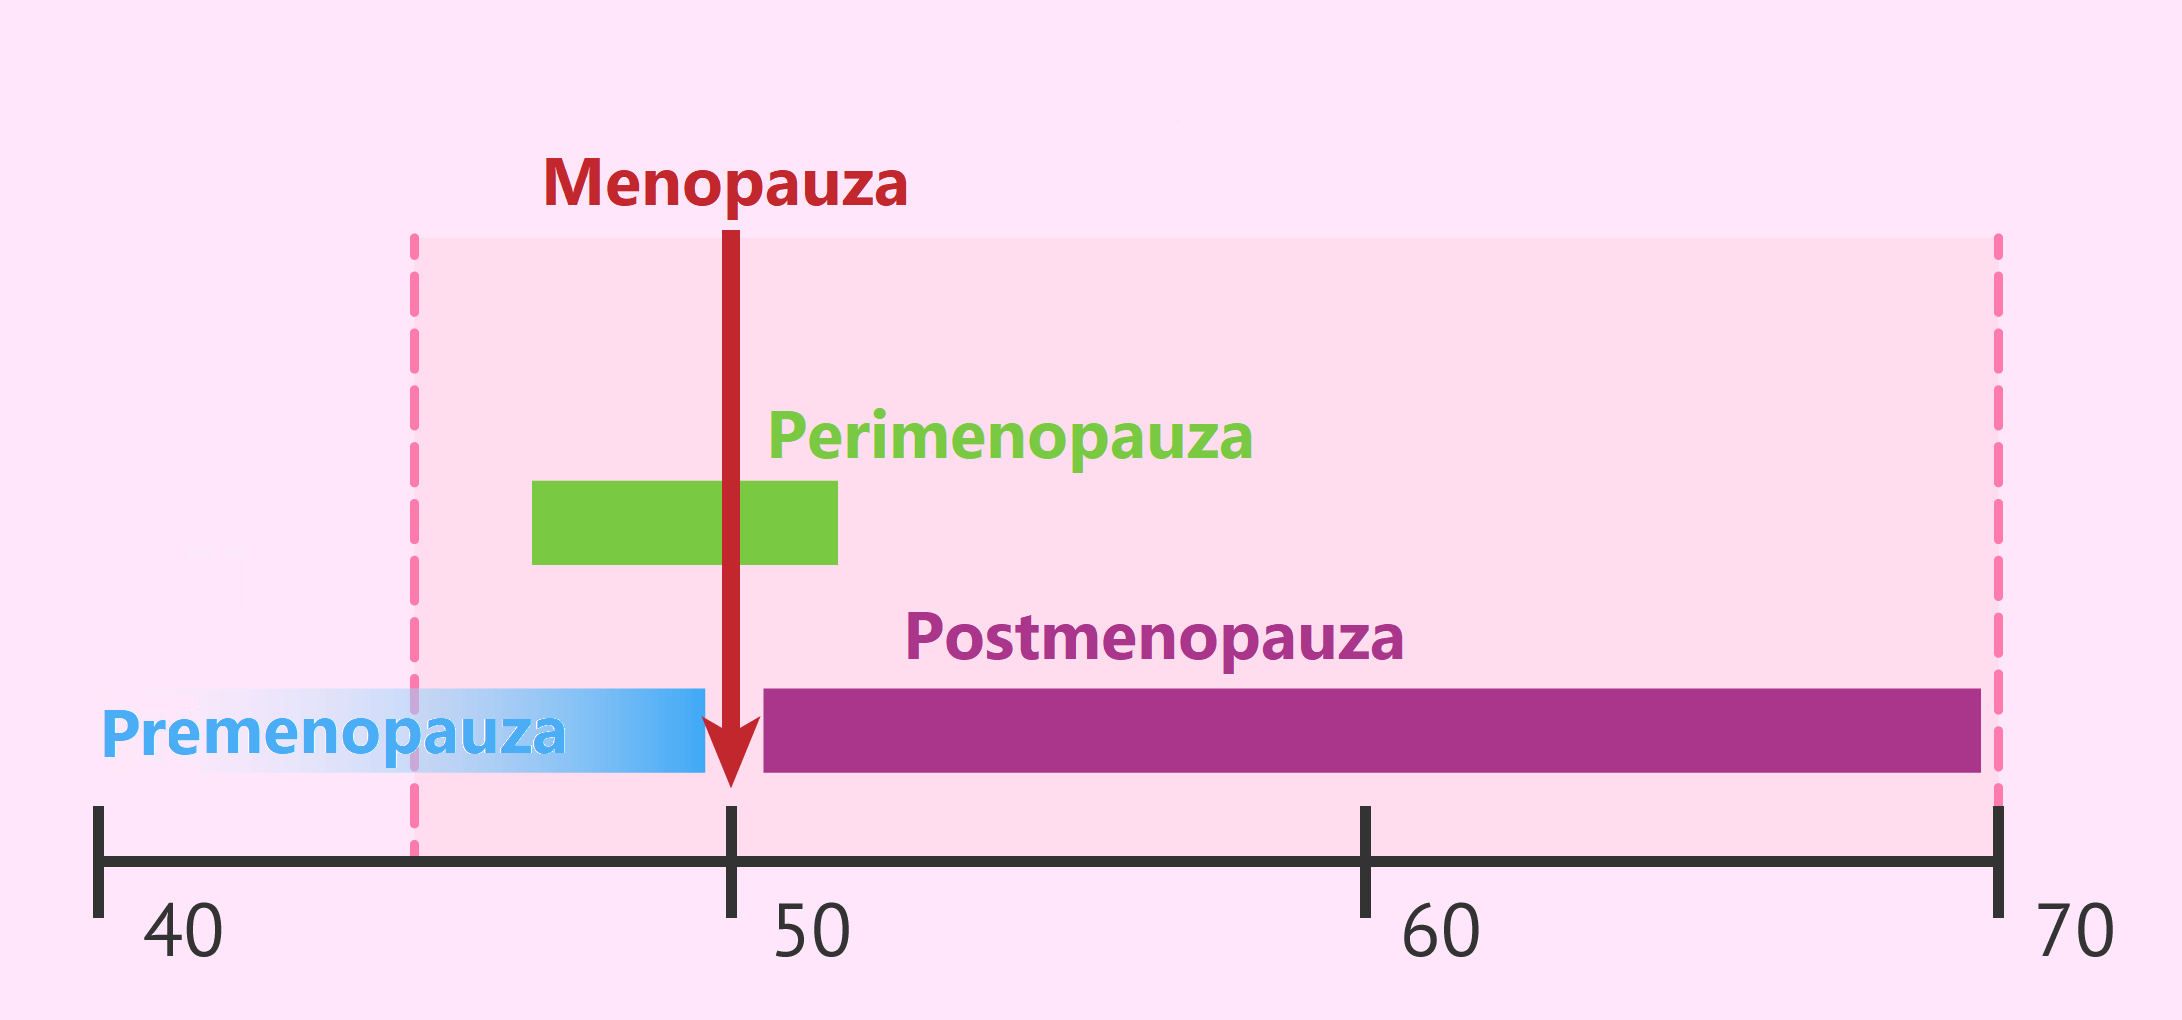 Etapy menopauzy. Źródło: https://www.invitra.com/en/menopause/stages-of-menopause/